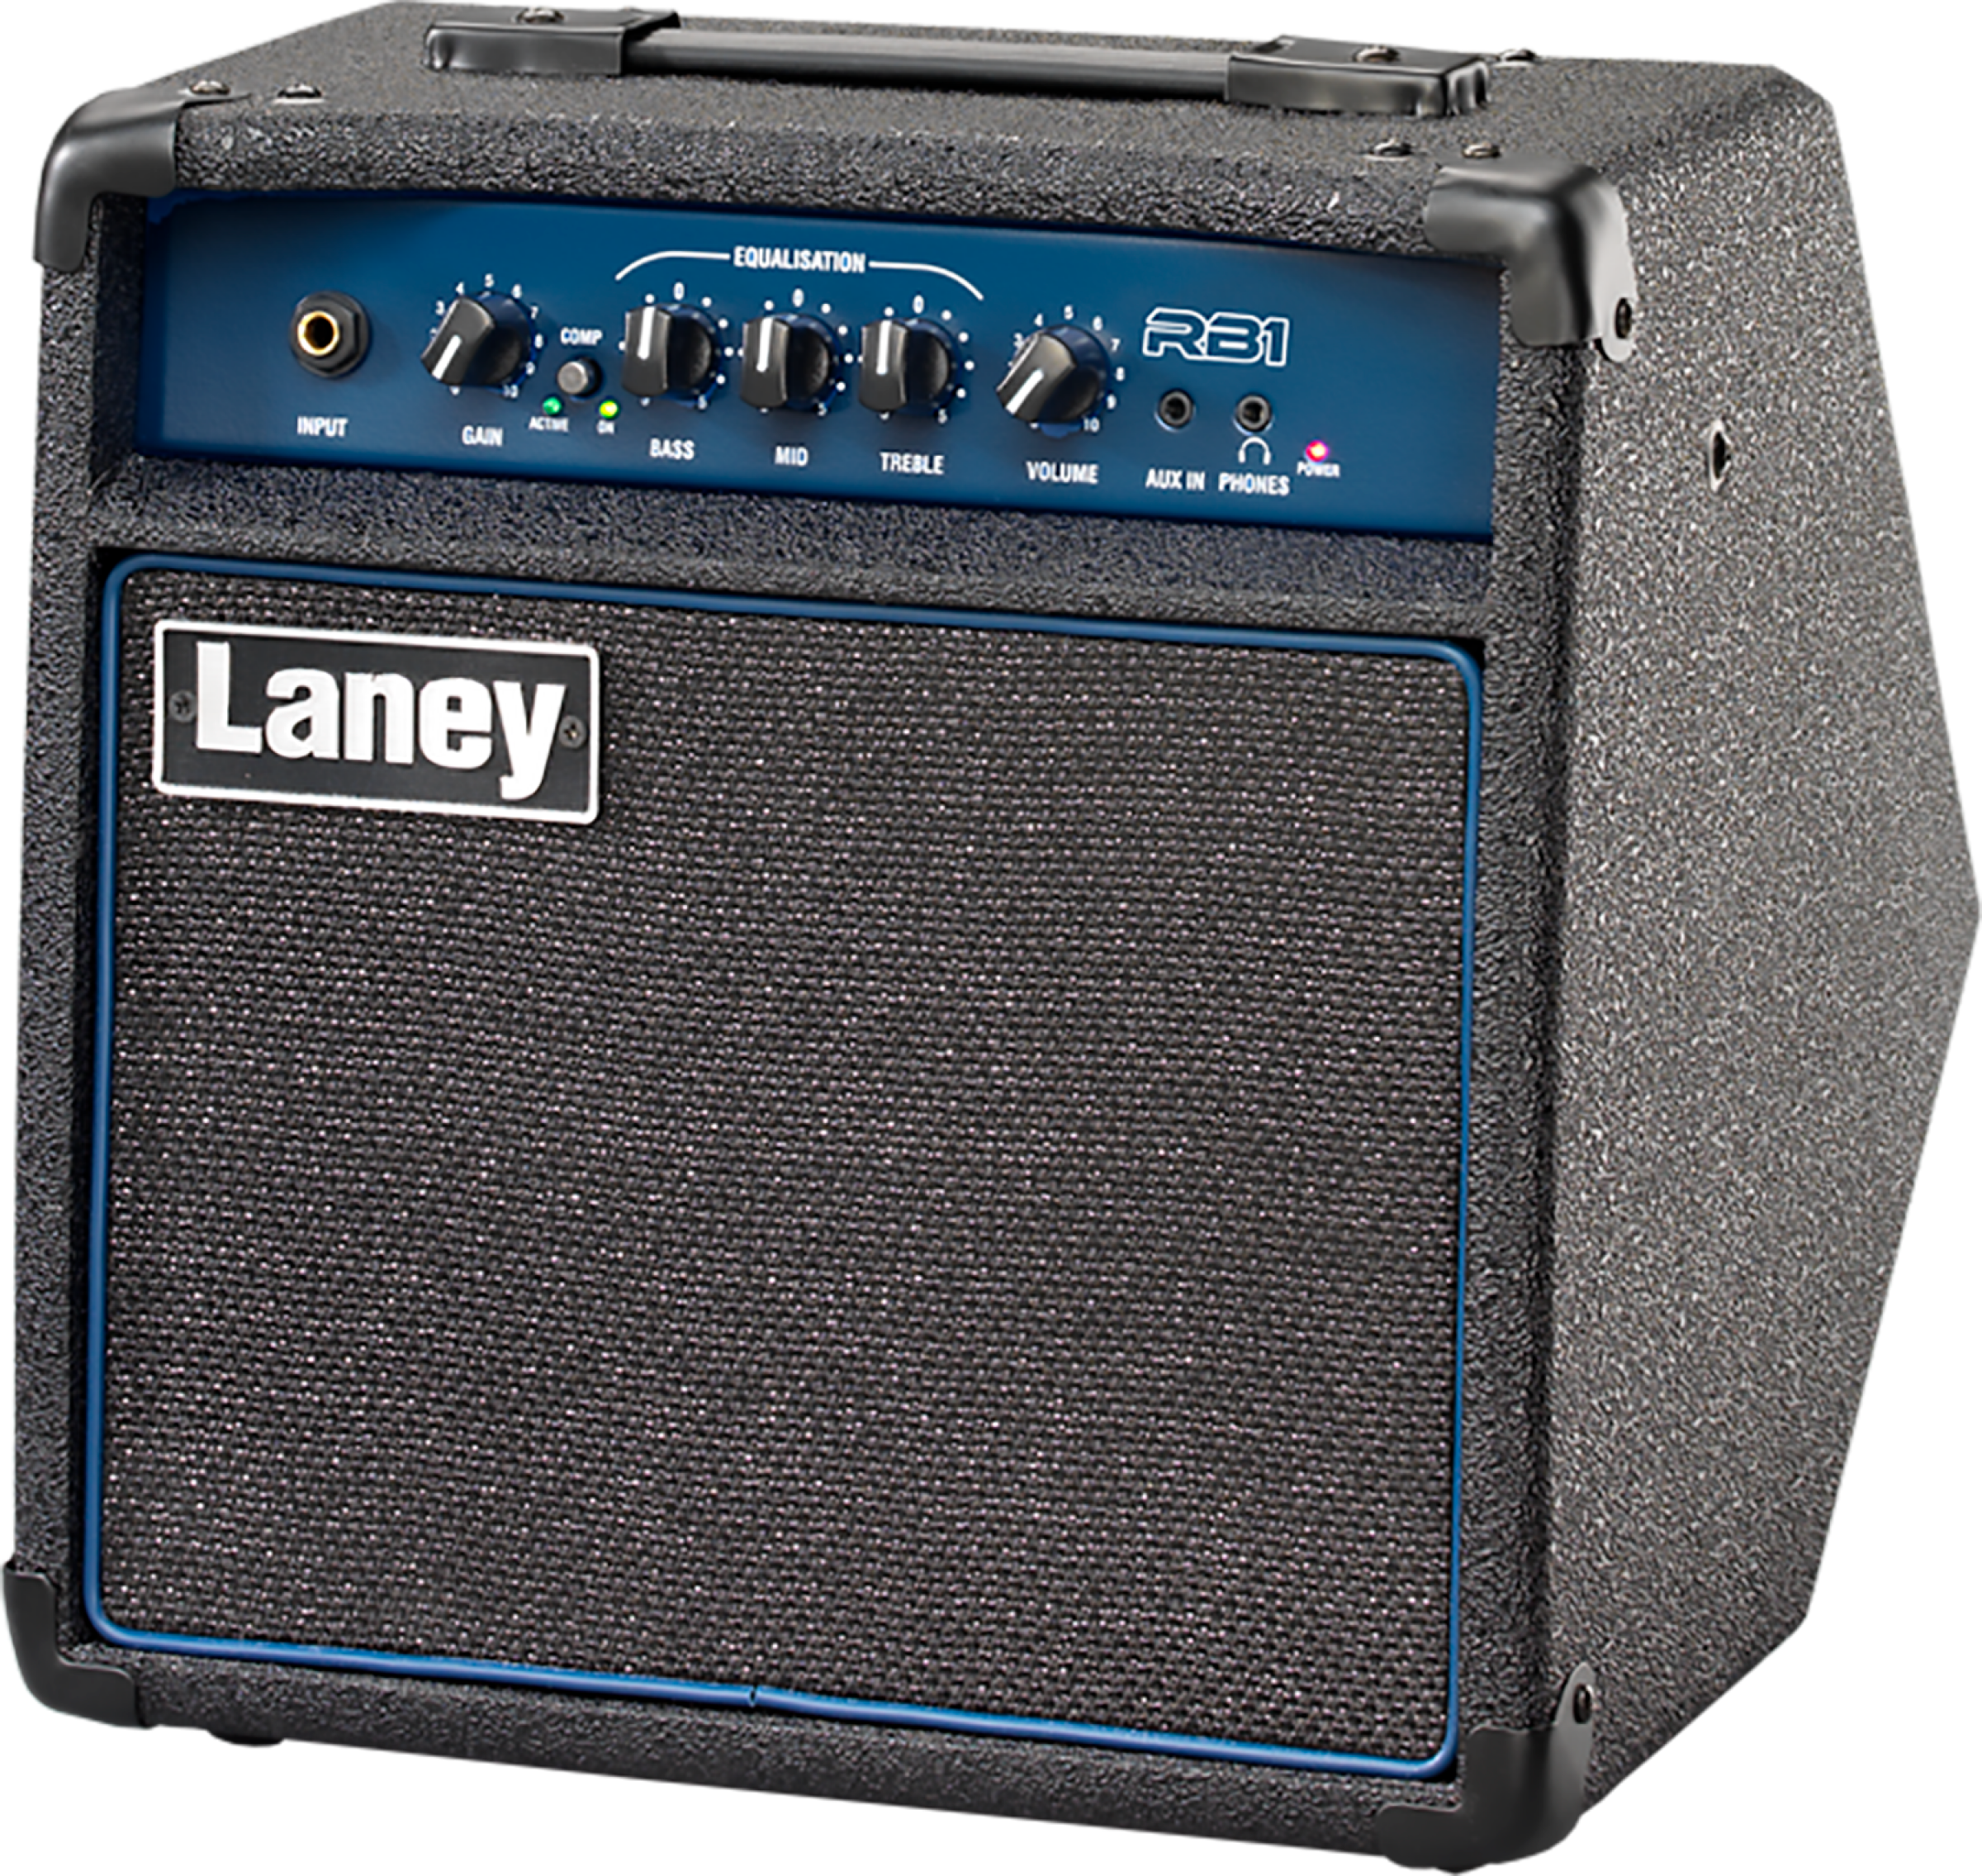 Laney Richter Rb1 15w 1x8 Black - Combo amplificador para bajo - Variation 2